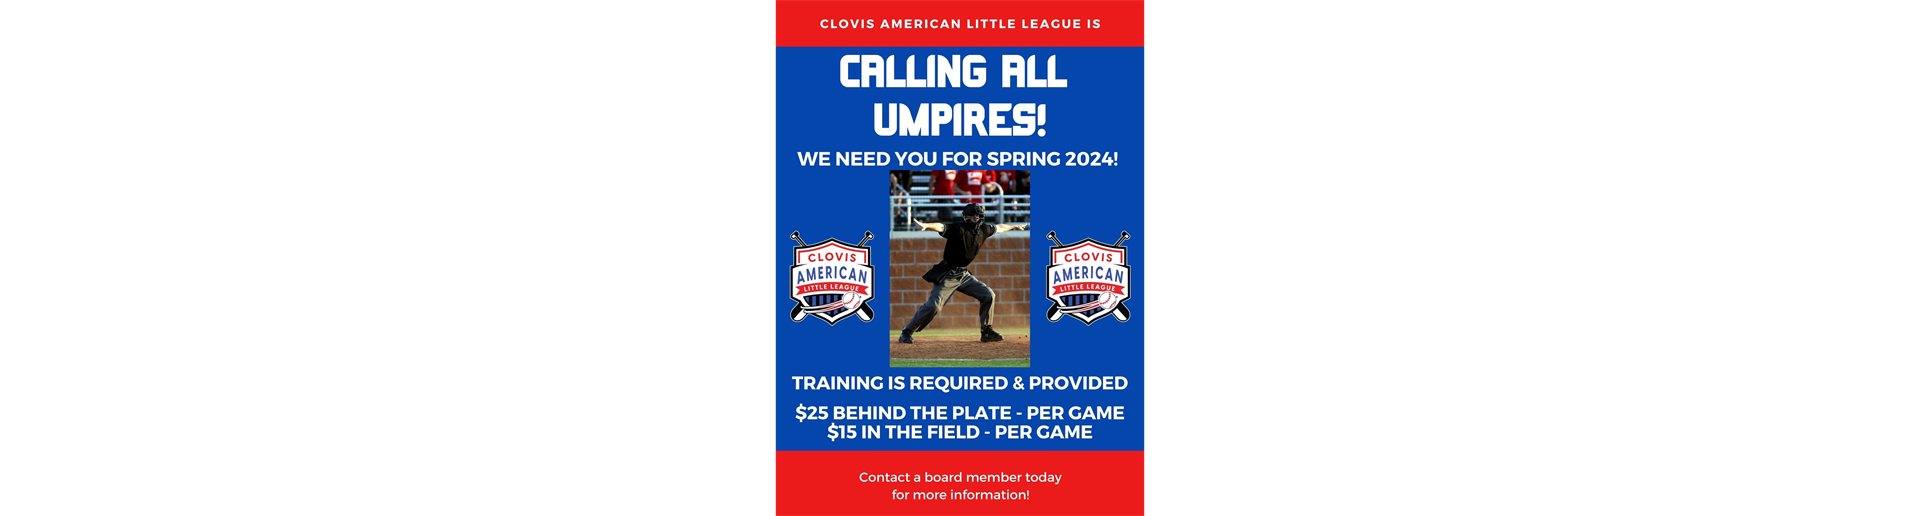 Calling All Umpires! 